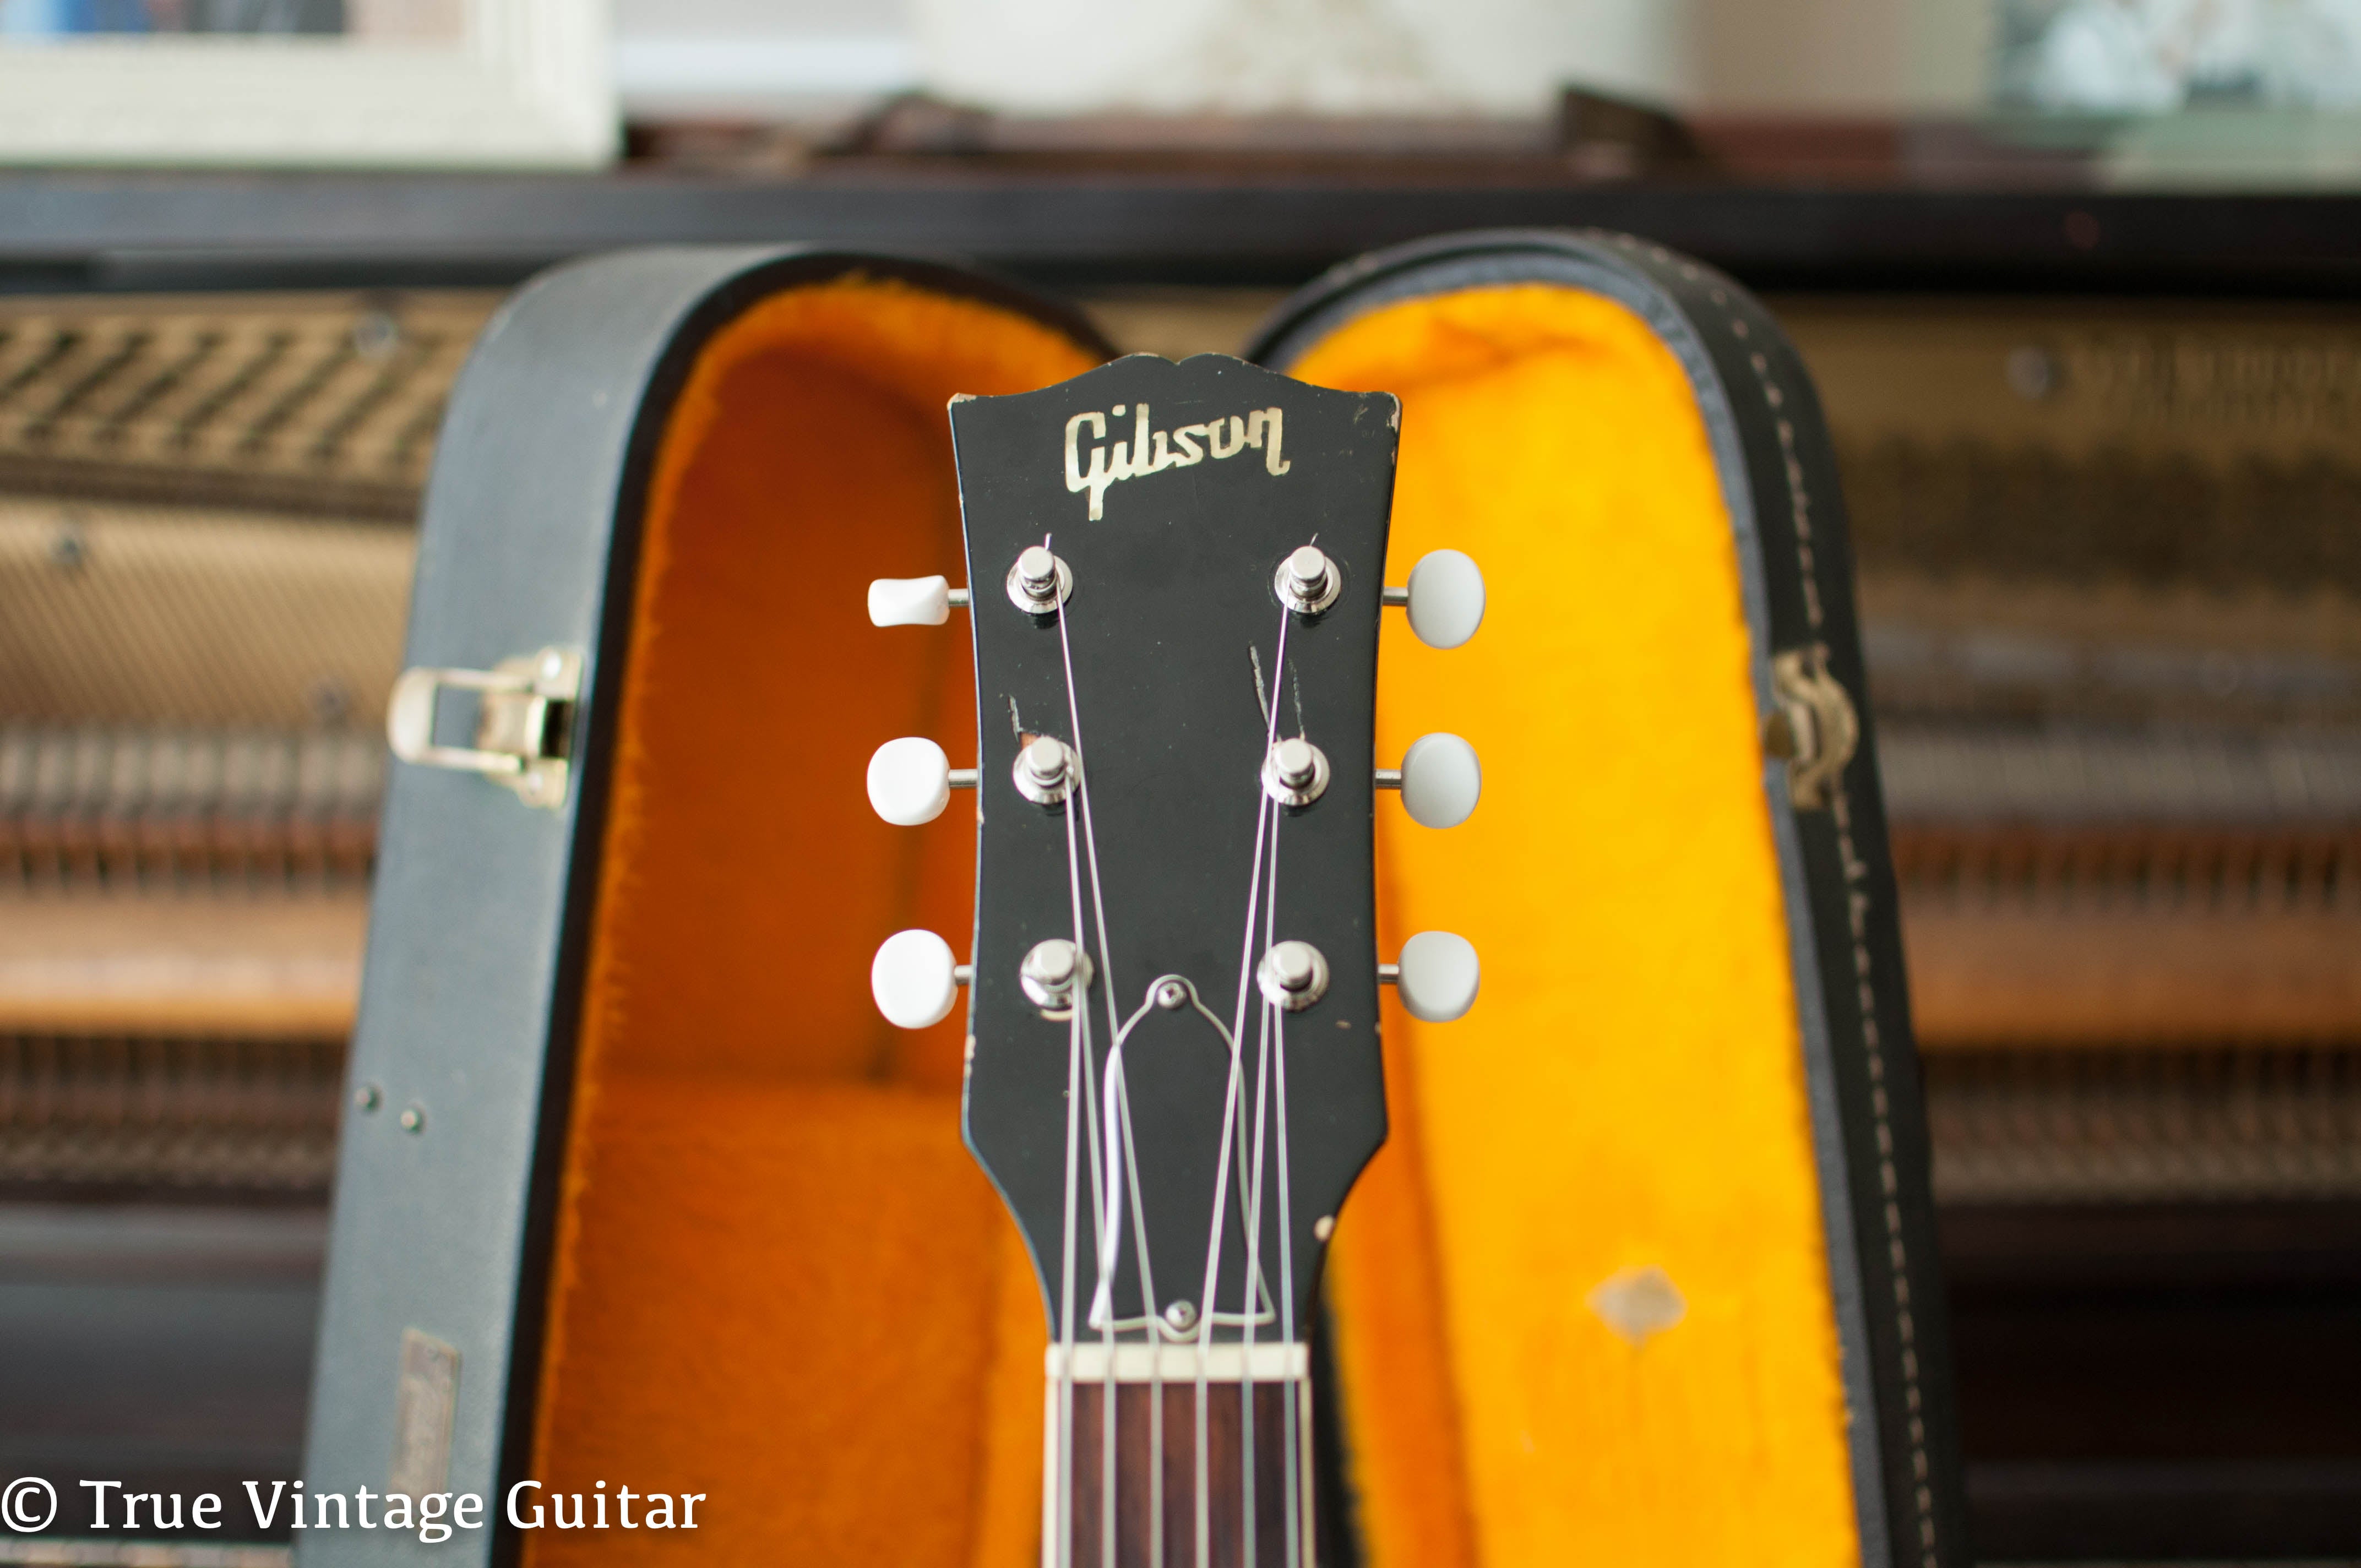 Headstock, pearl Gibson logo, Vintage 1966 Gibson ES-330 electric guitar